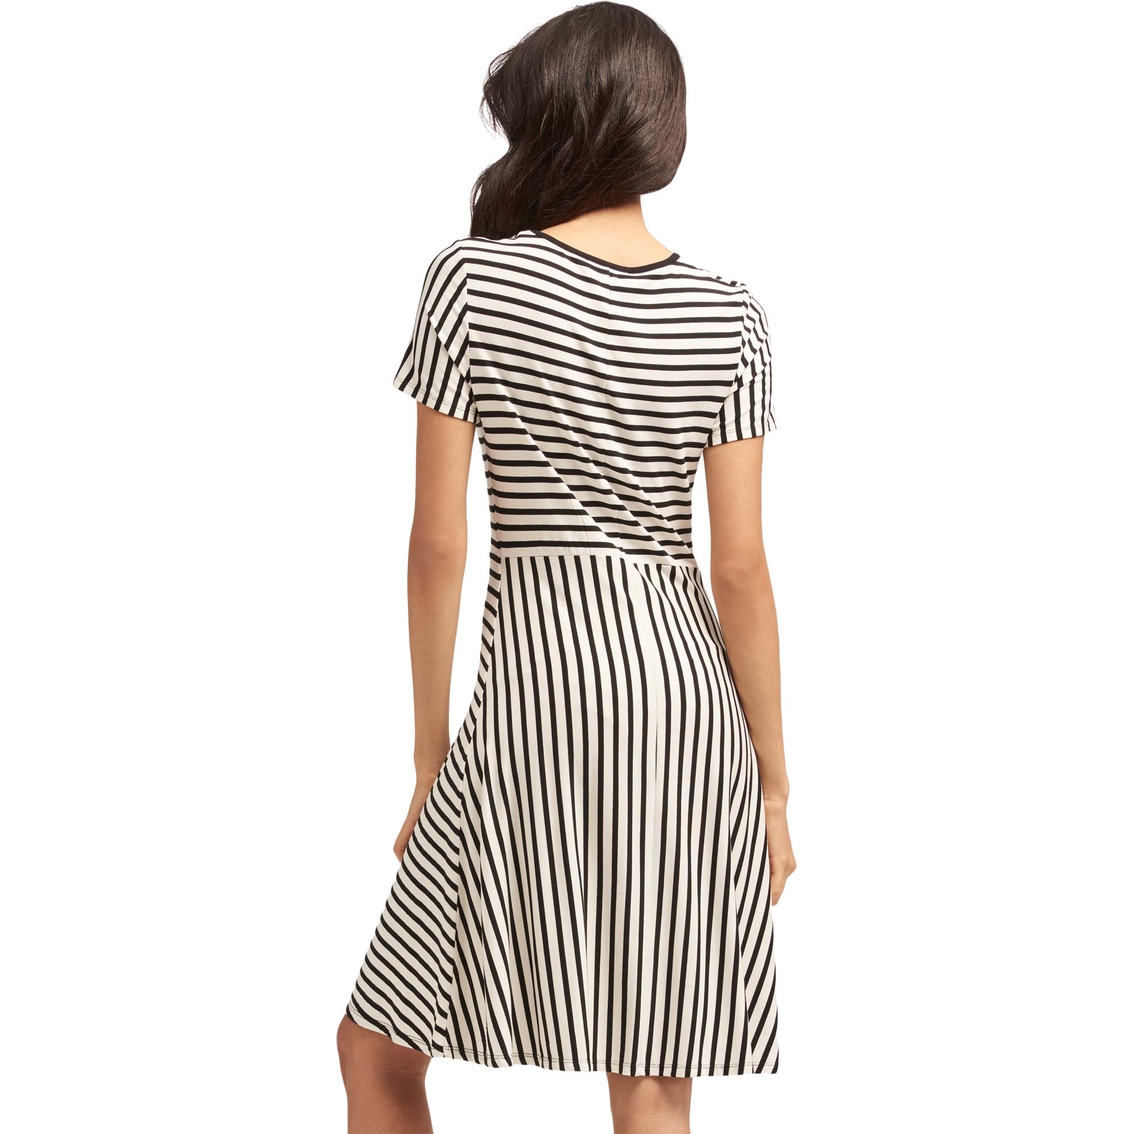 Dkny By Donna Karan Crew Stripe Dress | Dresses | Clothing ...